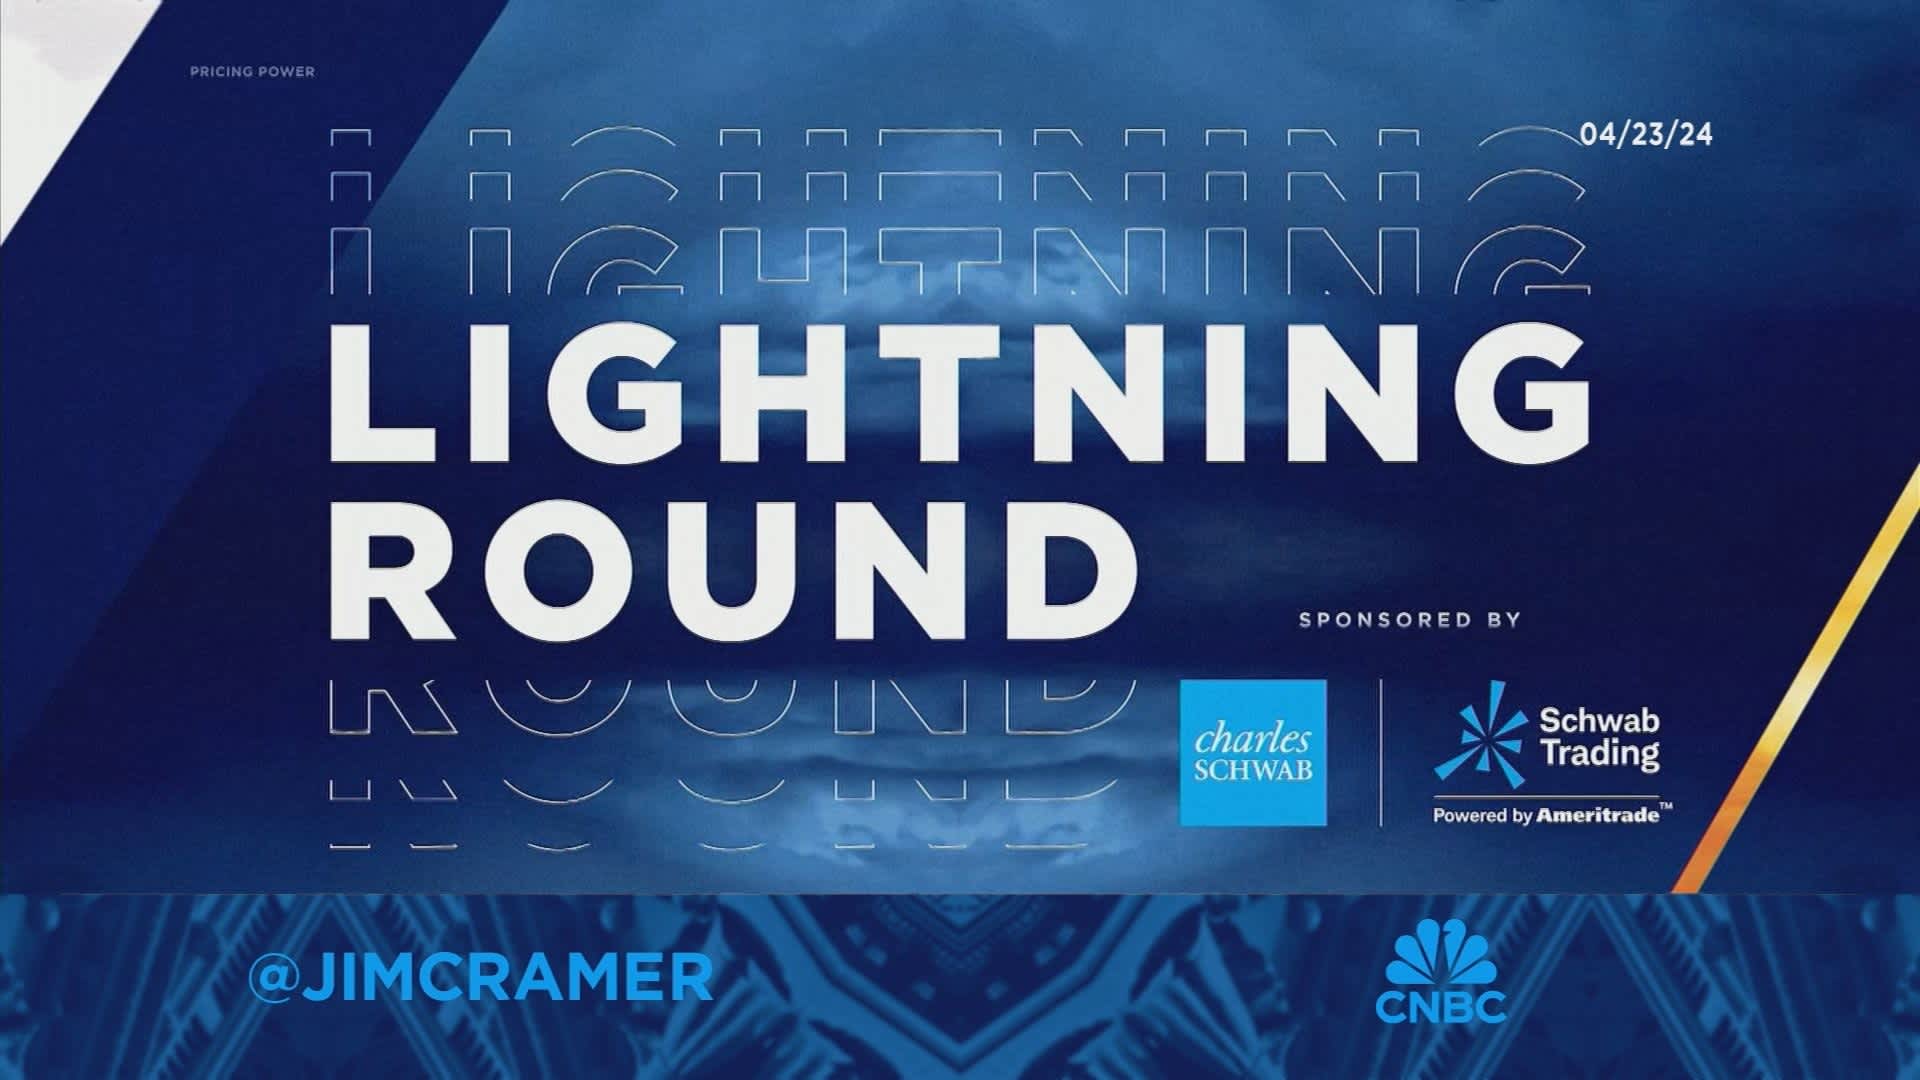 Lightning Round: Casey’s General Store is a ‘hidden gem’, says Jim Cramer [Video]